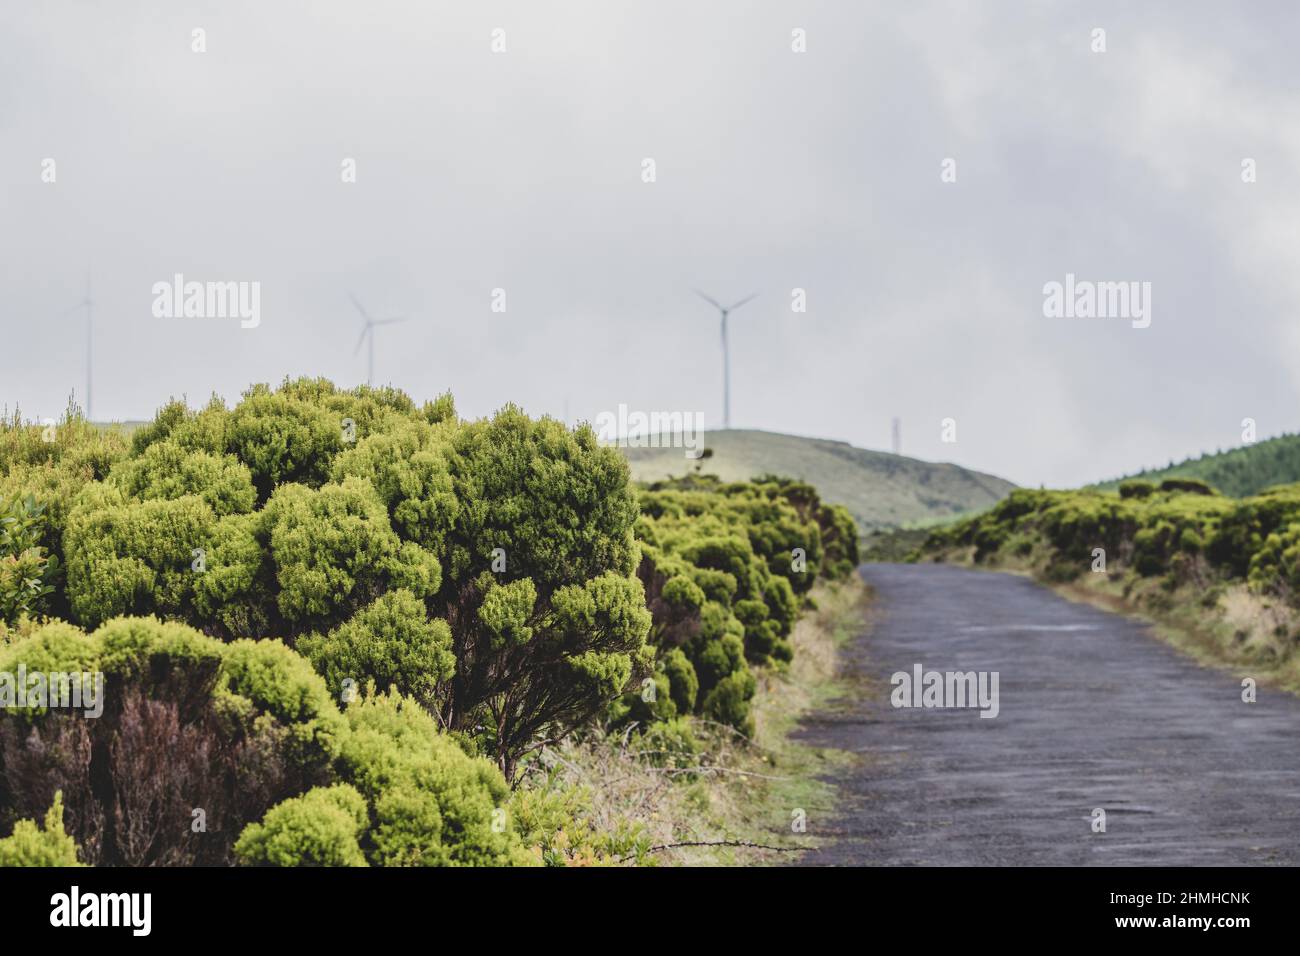 Tree heath, Erica arborea, mountain road, wind turbine, fog, Montanha do Pico, Pico, Azores, Portugal Stock Photo